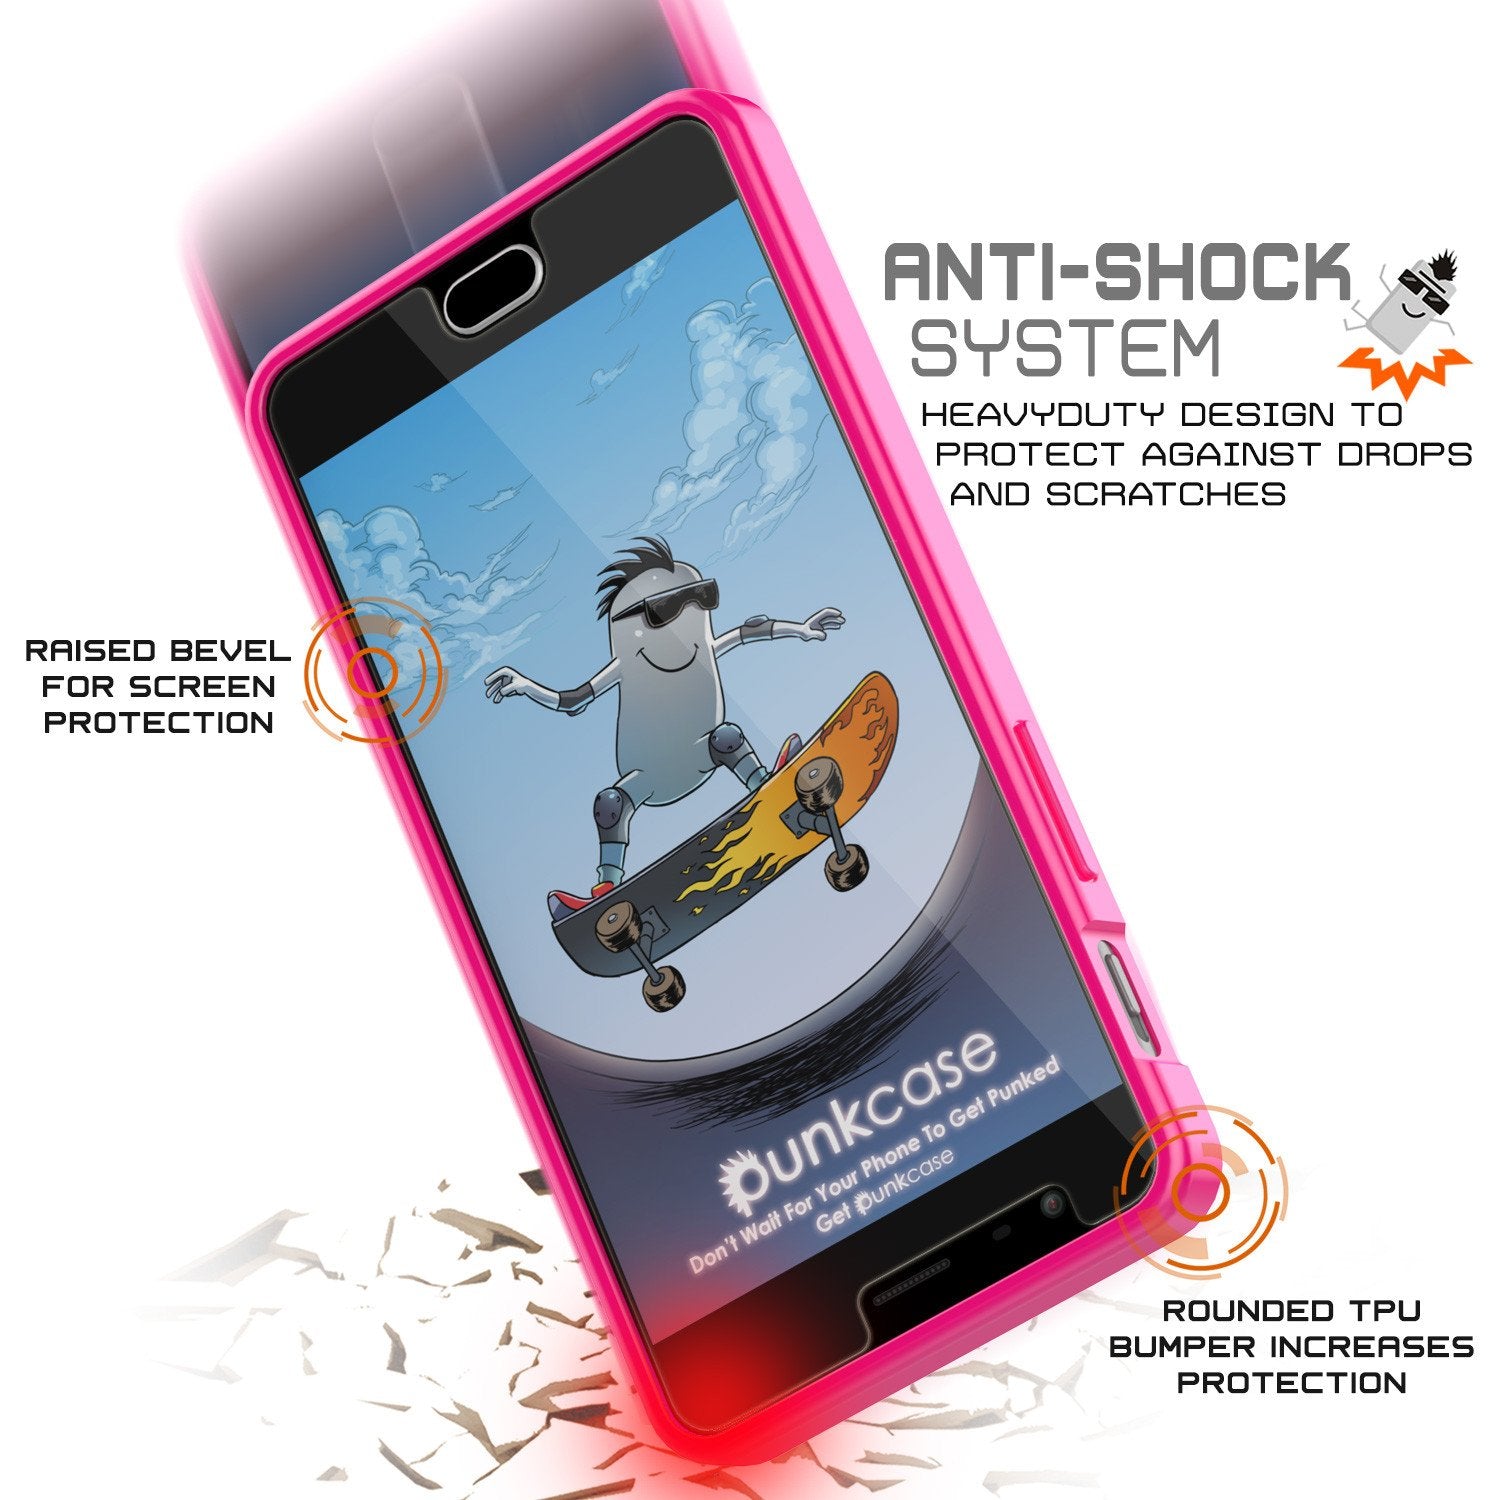 OnePlus 3 Case Punkcase® LUCID 2.0 Pink Series w/ SHIELD GLASS Lifetime Warranty Exchange - PunkCase NZ